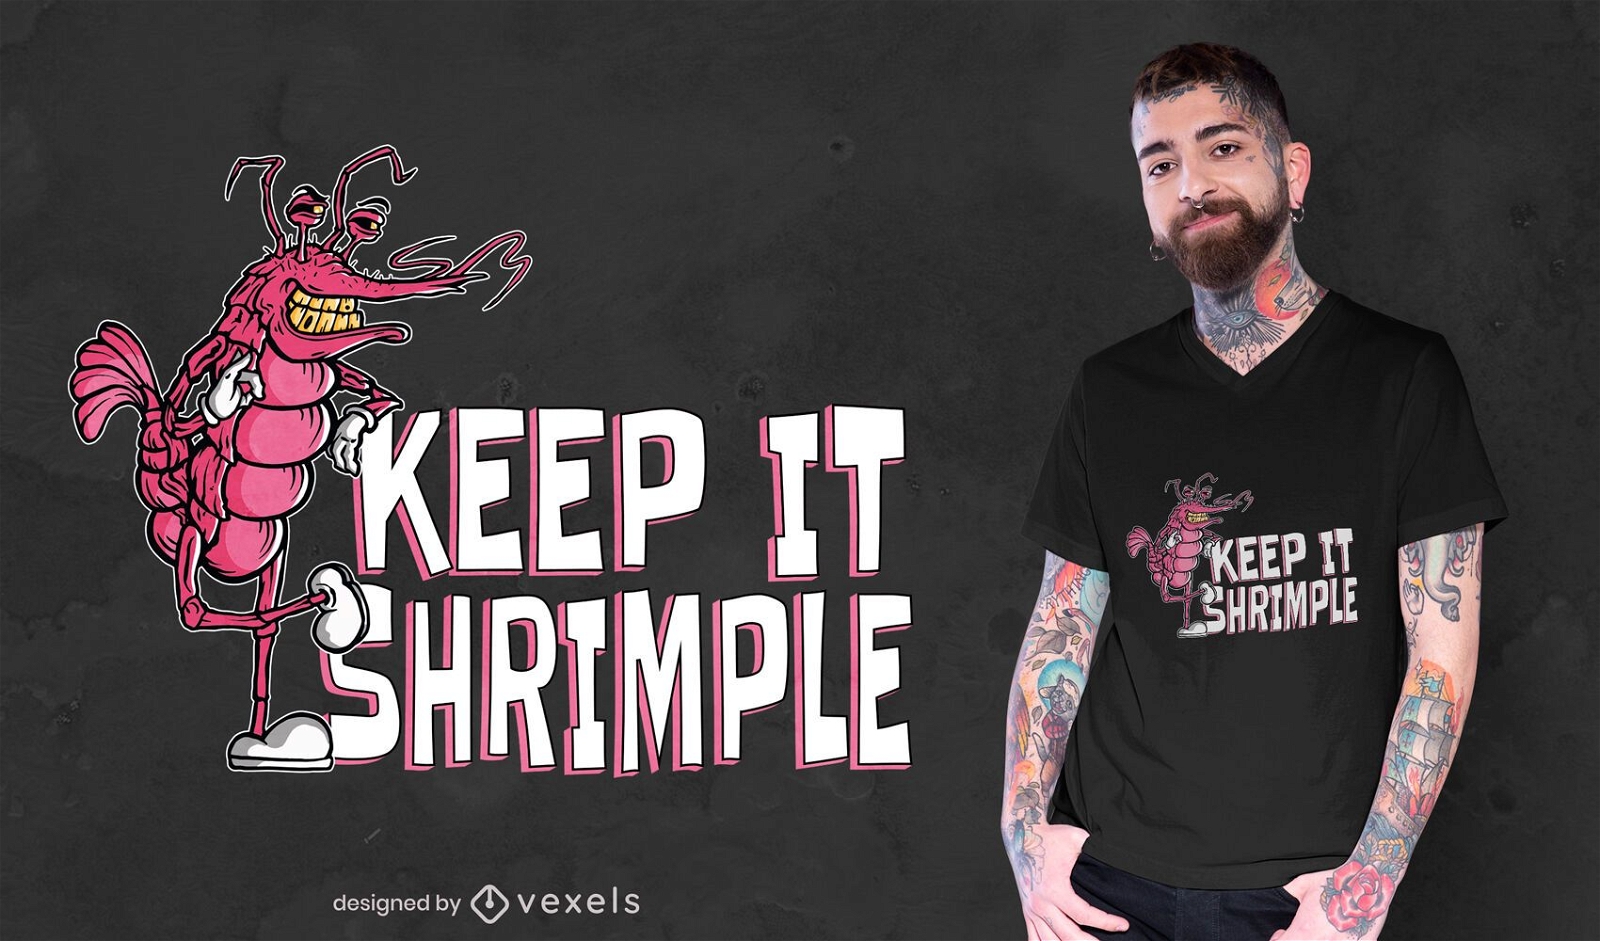 Keep it shrimple t-shirt design